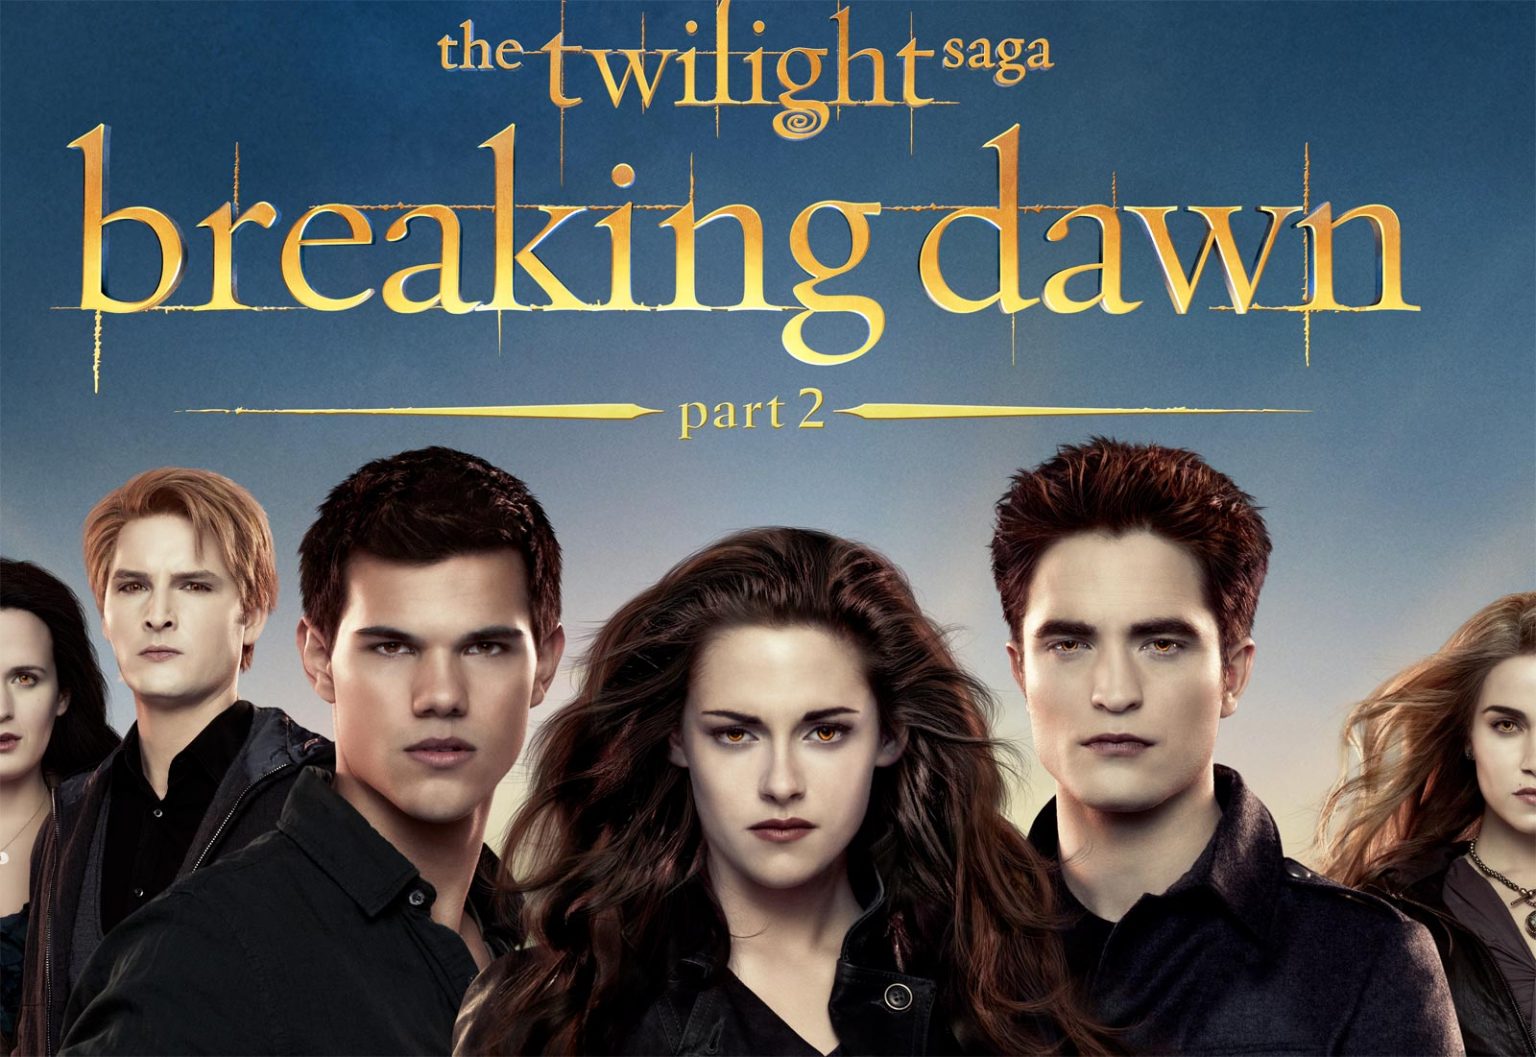 instal the last version for apple The Twilight Saga: Breaking Dawn, Part 2